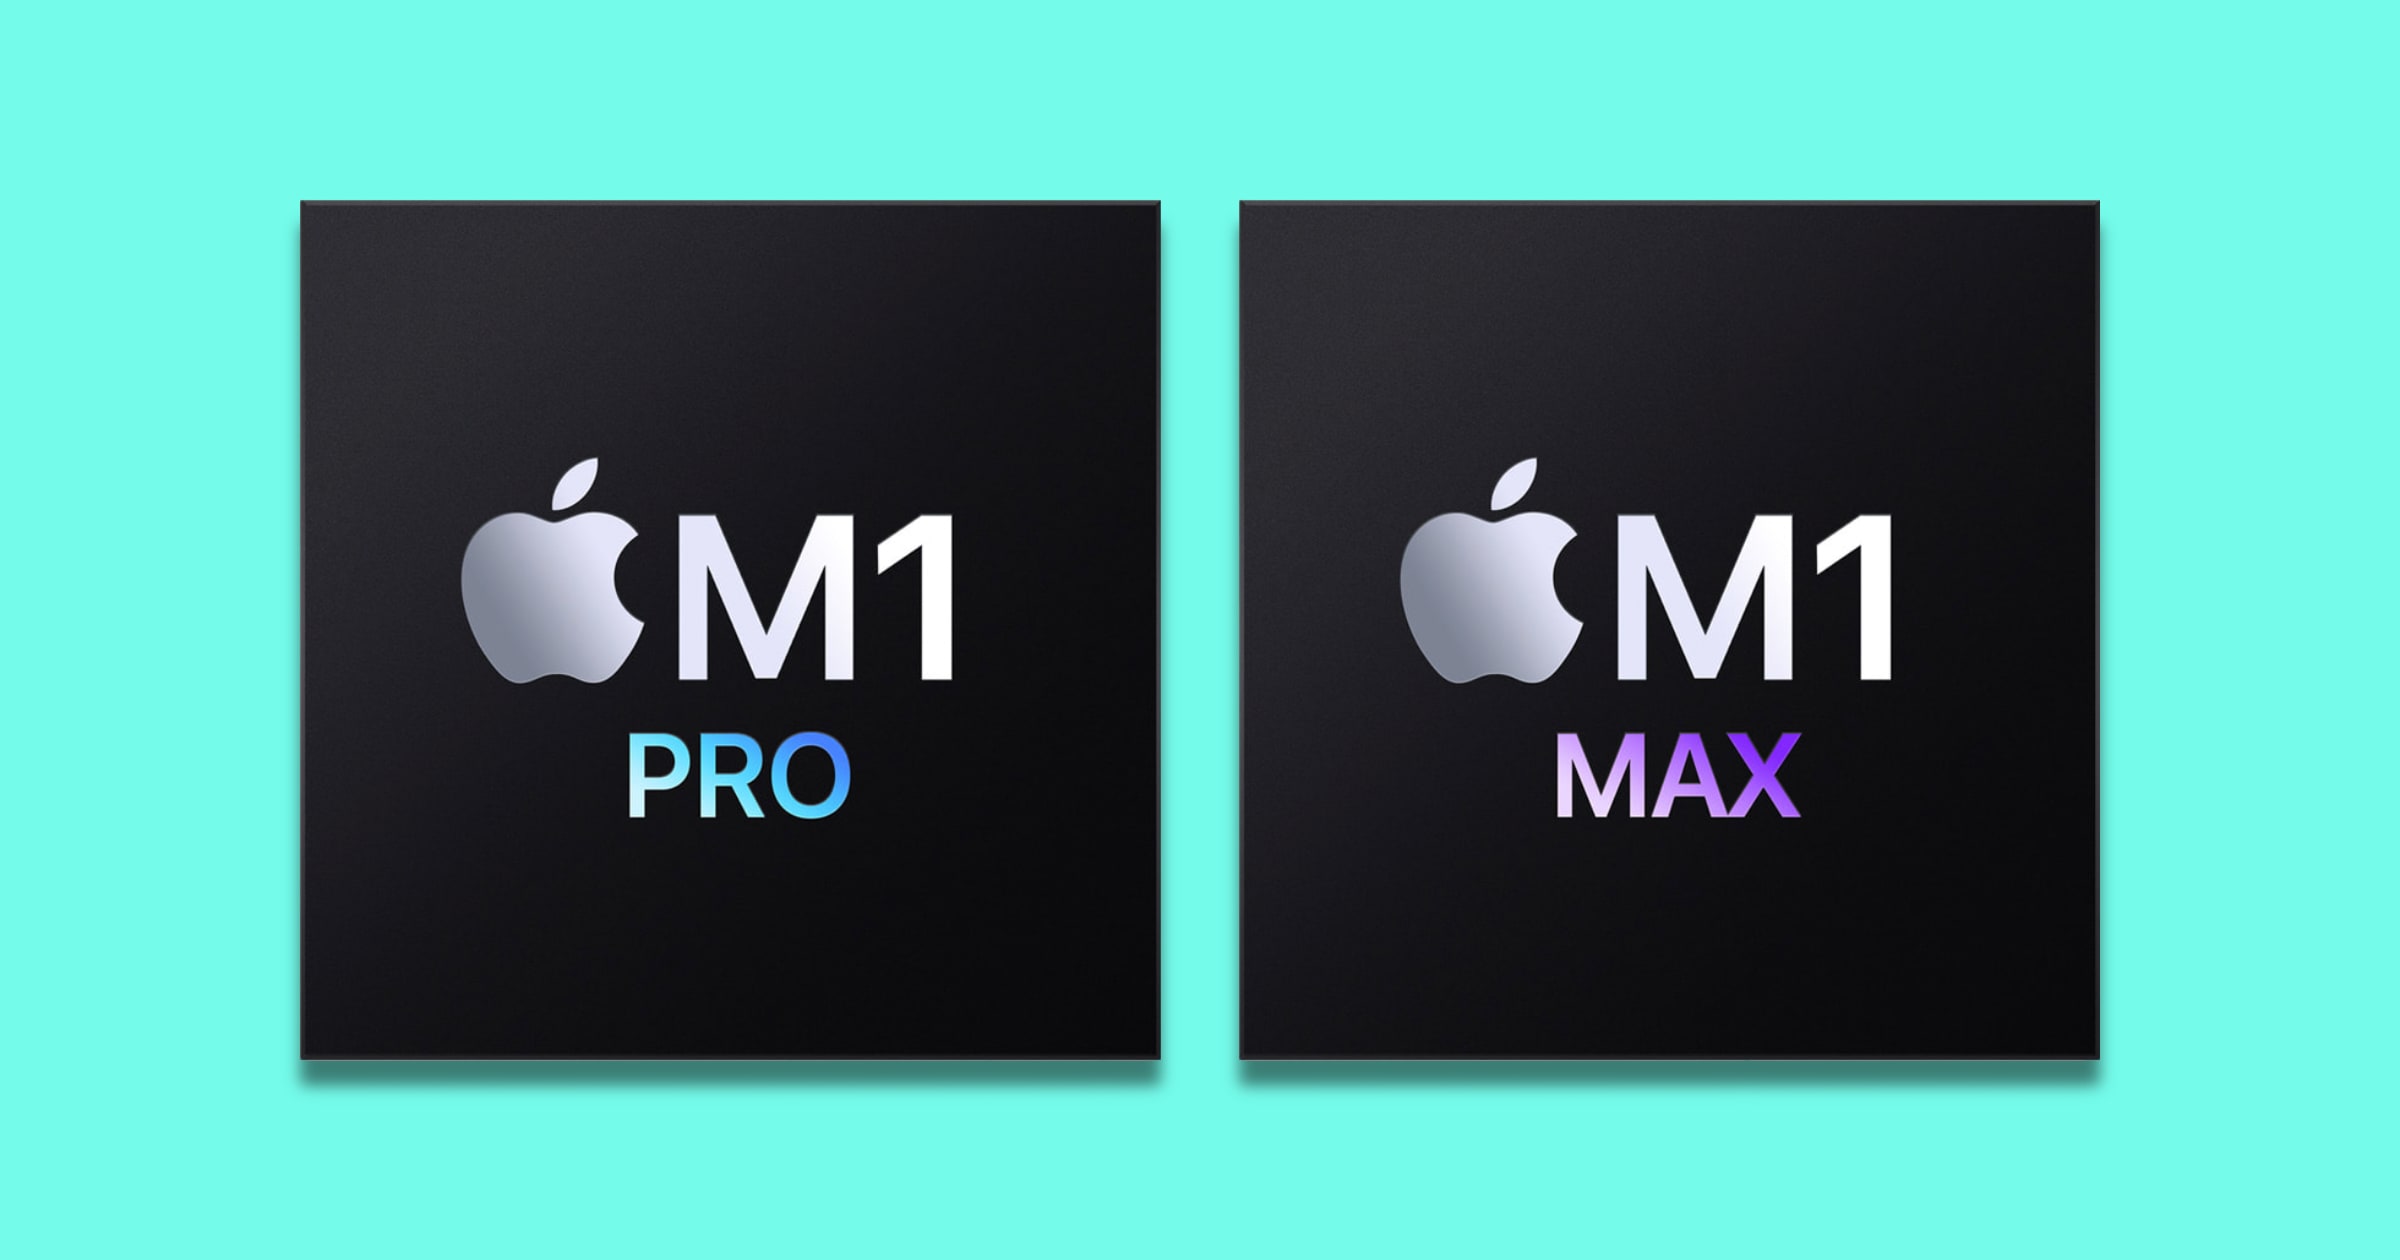 M1 Pro M1 Max chips